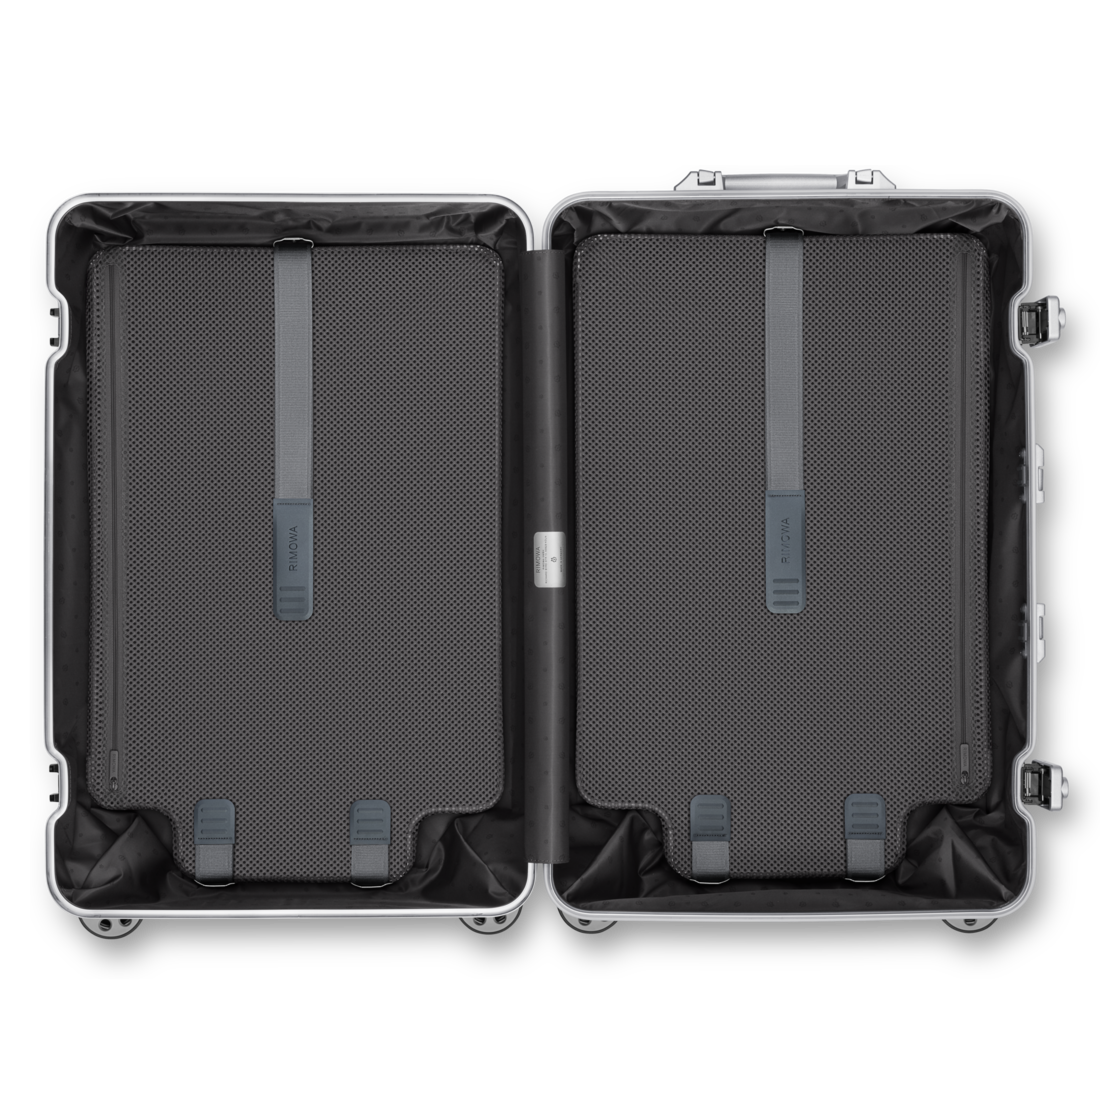 Rimowa Rimowa Classic Check-In M 27 Luggage-Silver (Luggage,26-29